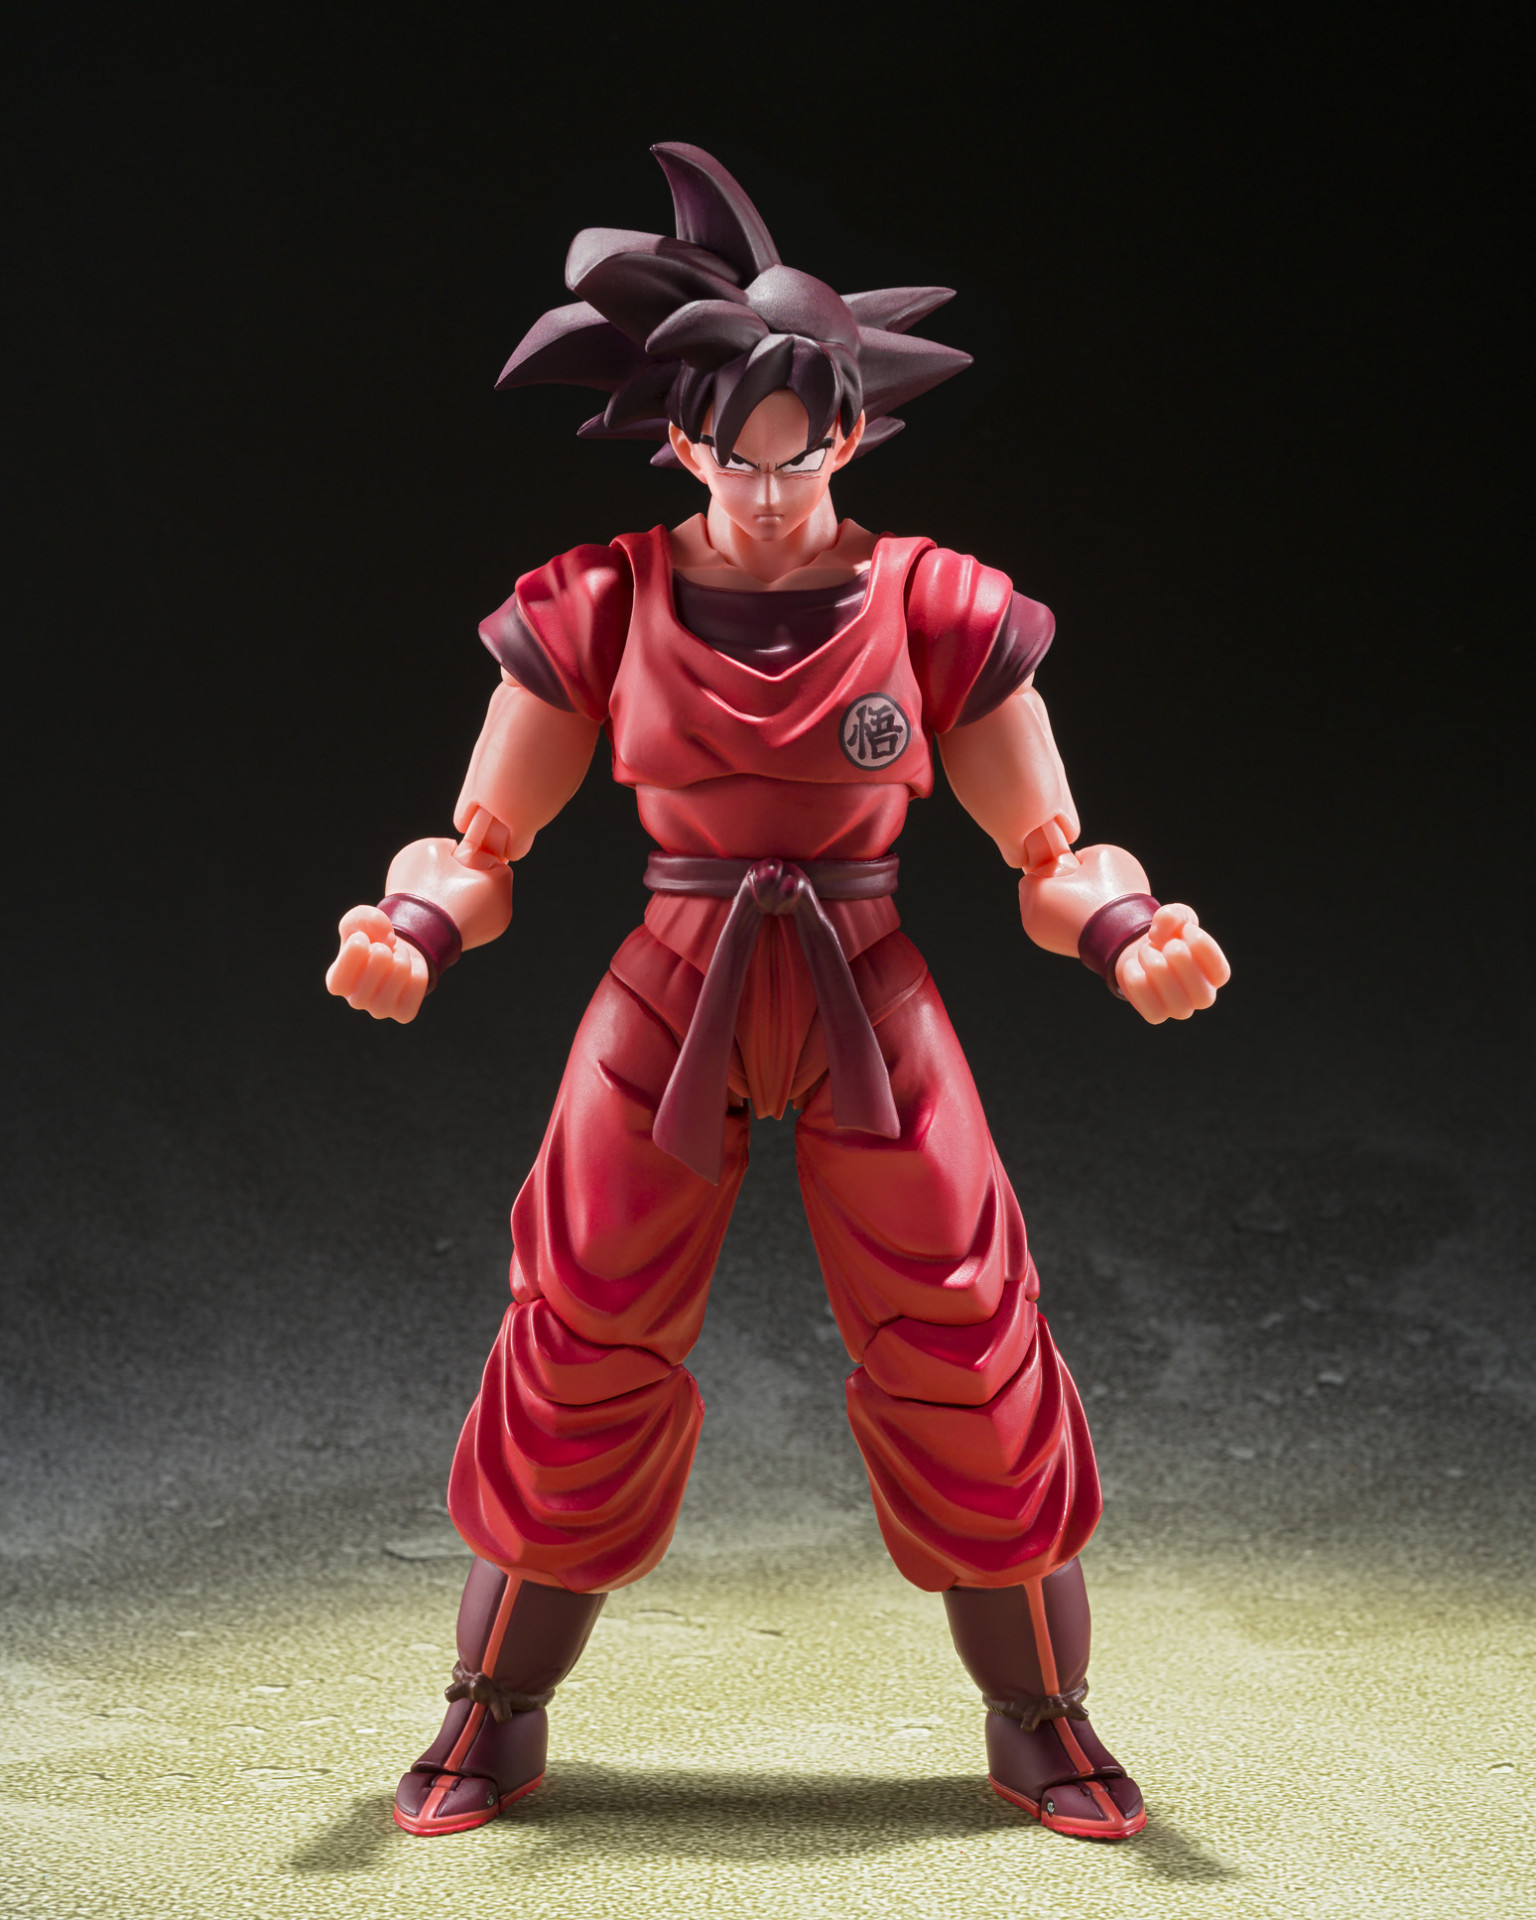 Kaio-Ken Goku -Power Level 24,000- Comes to the S.H.Figuarts